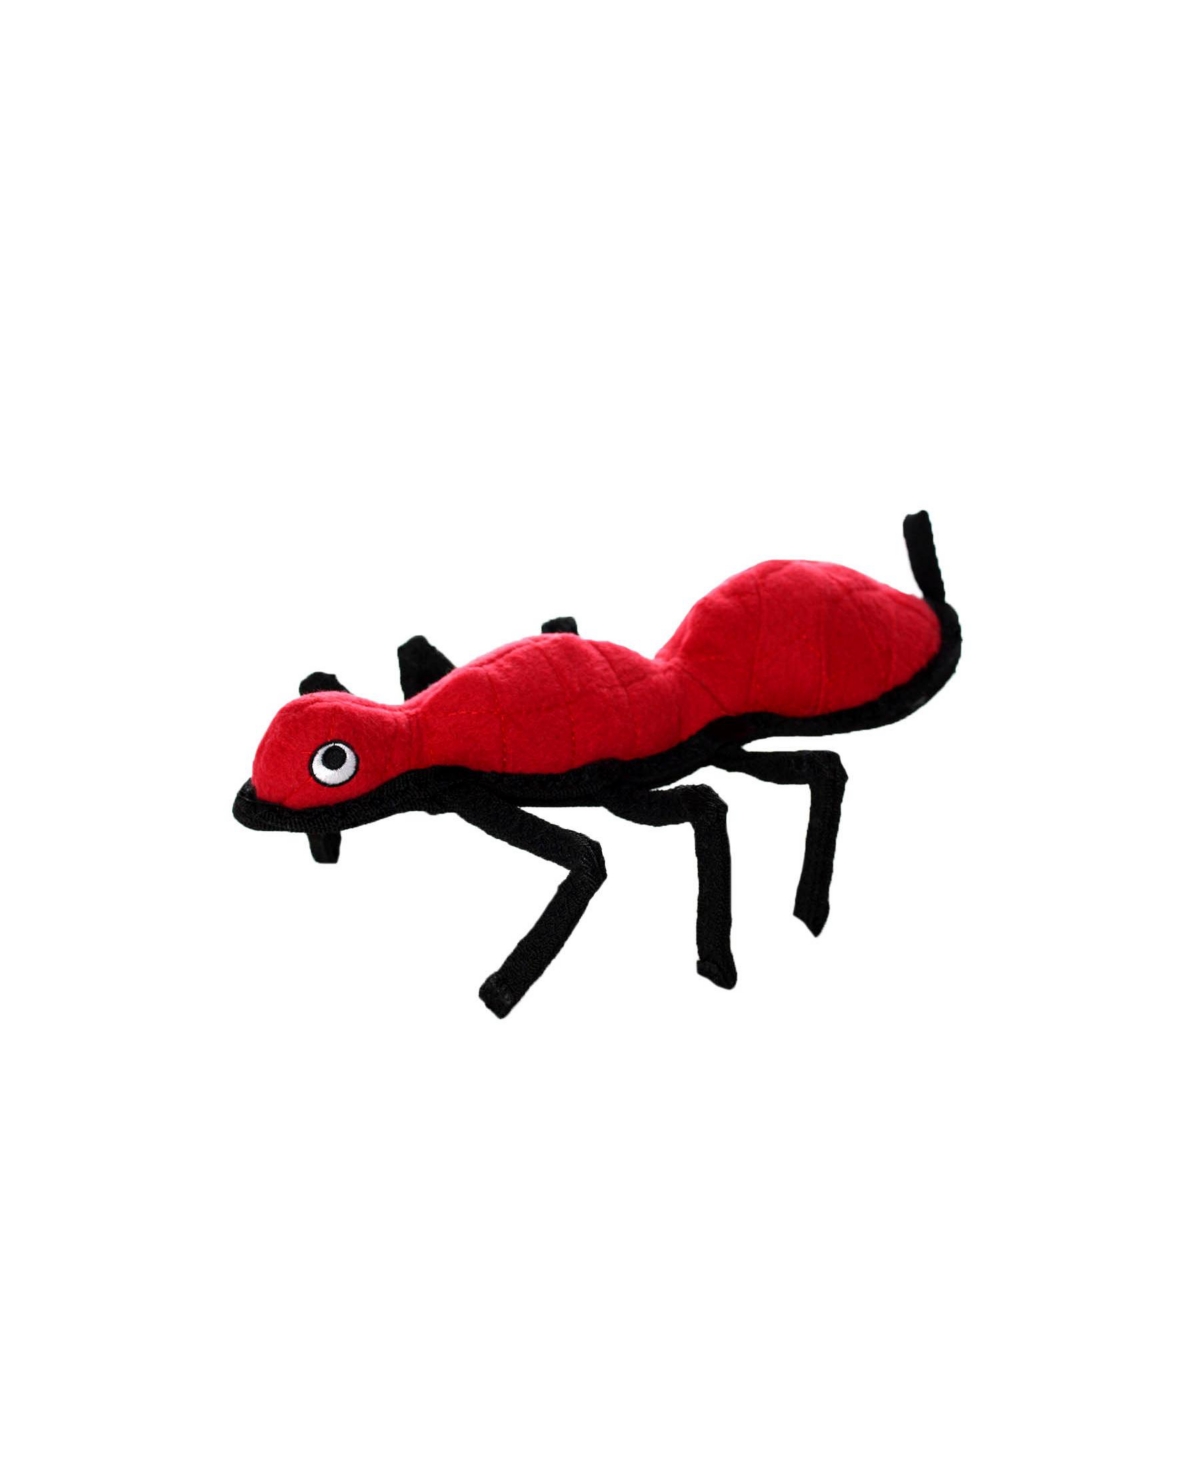 Desert Ant, Dog Toy - Red